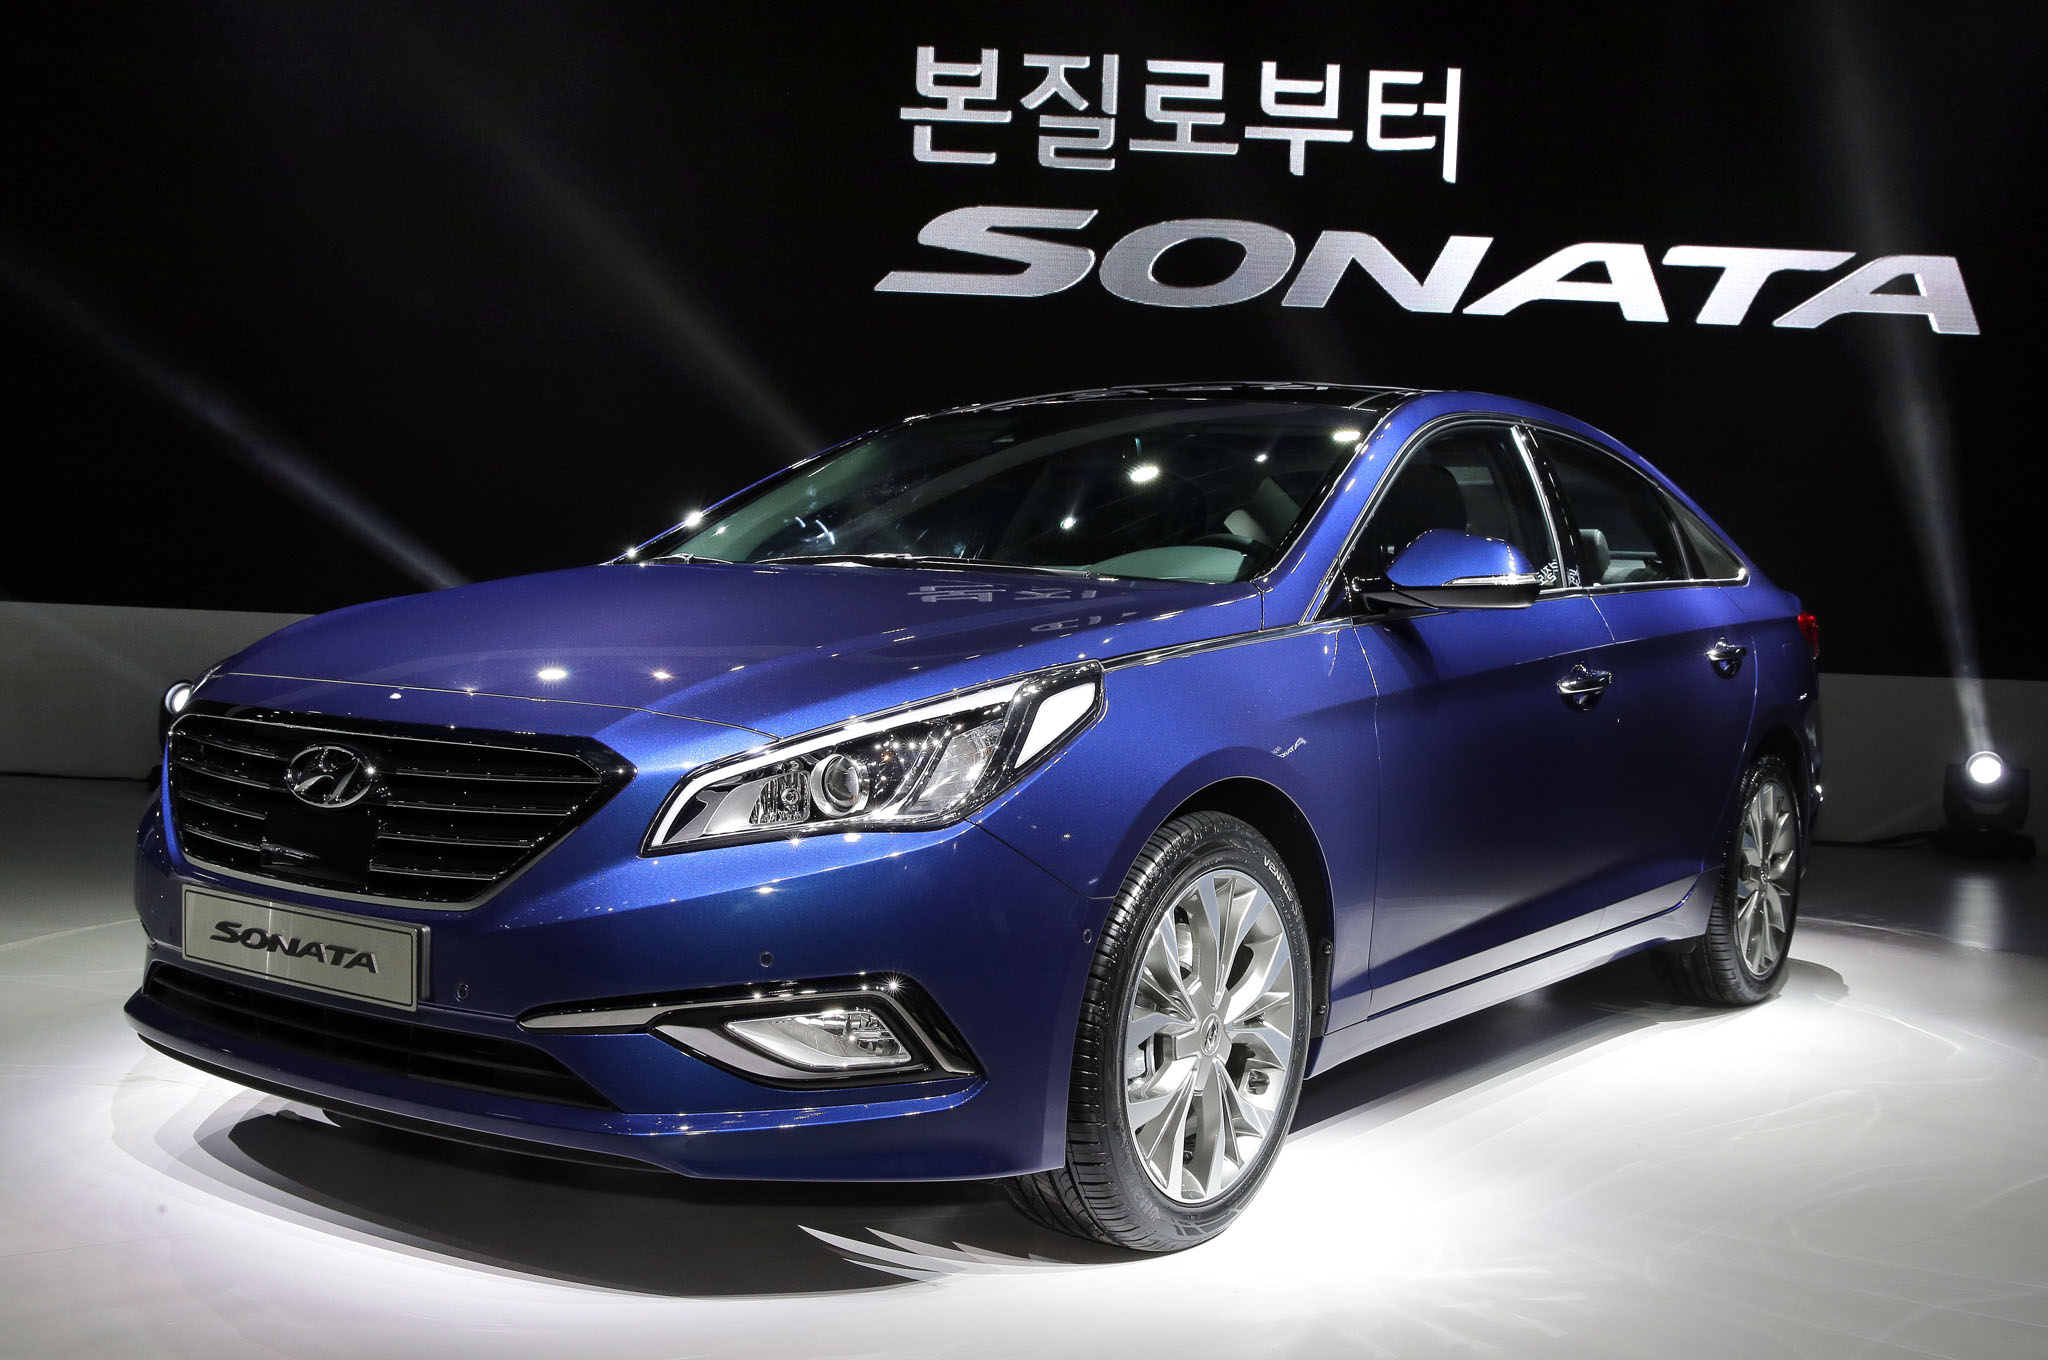 New 2015 Hyundai Sonata